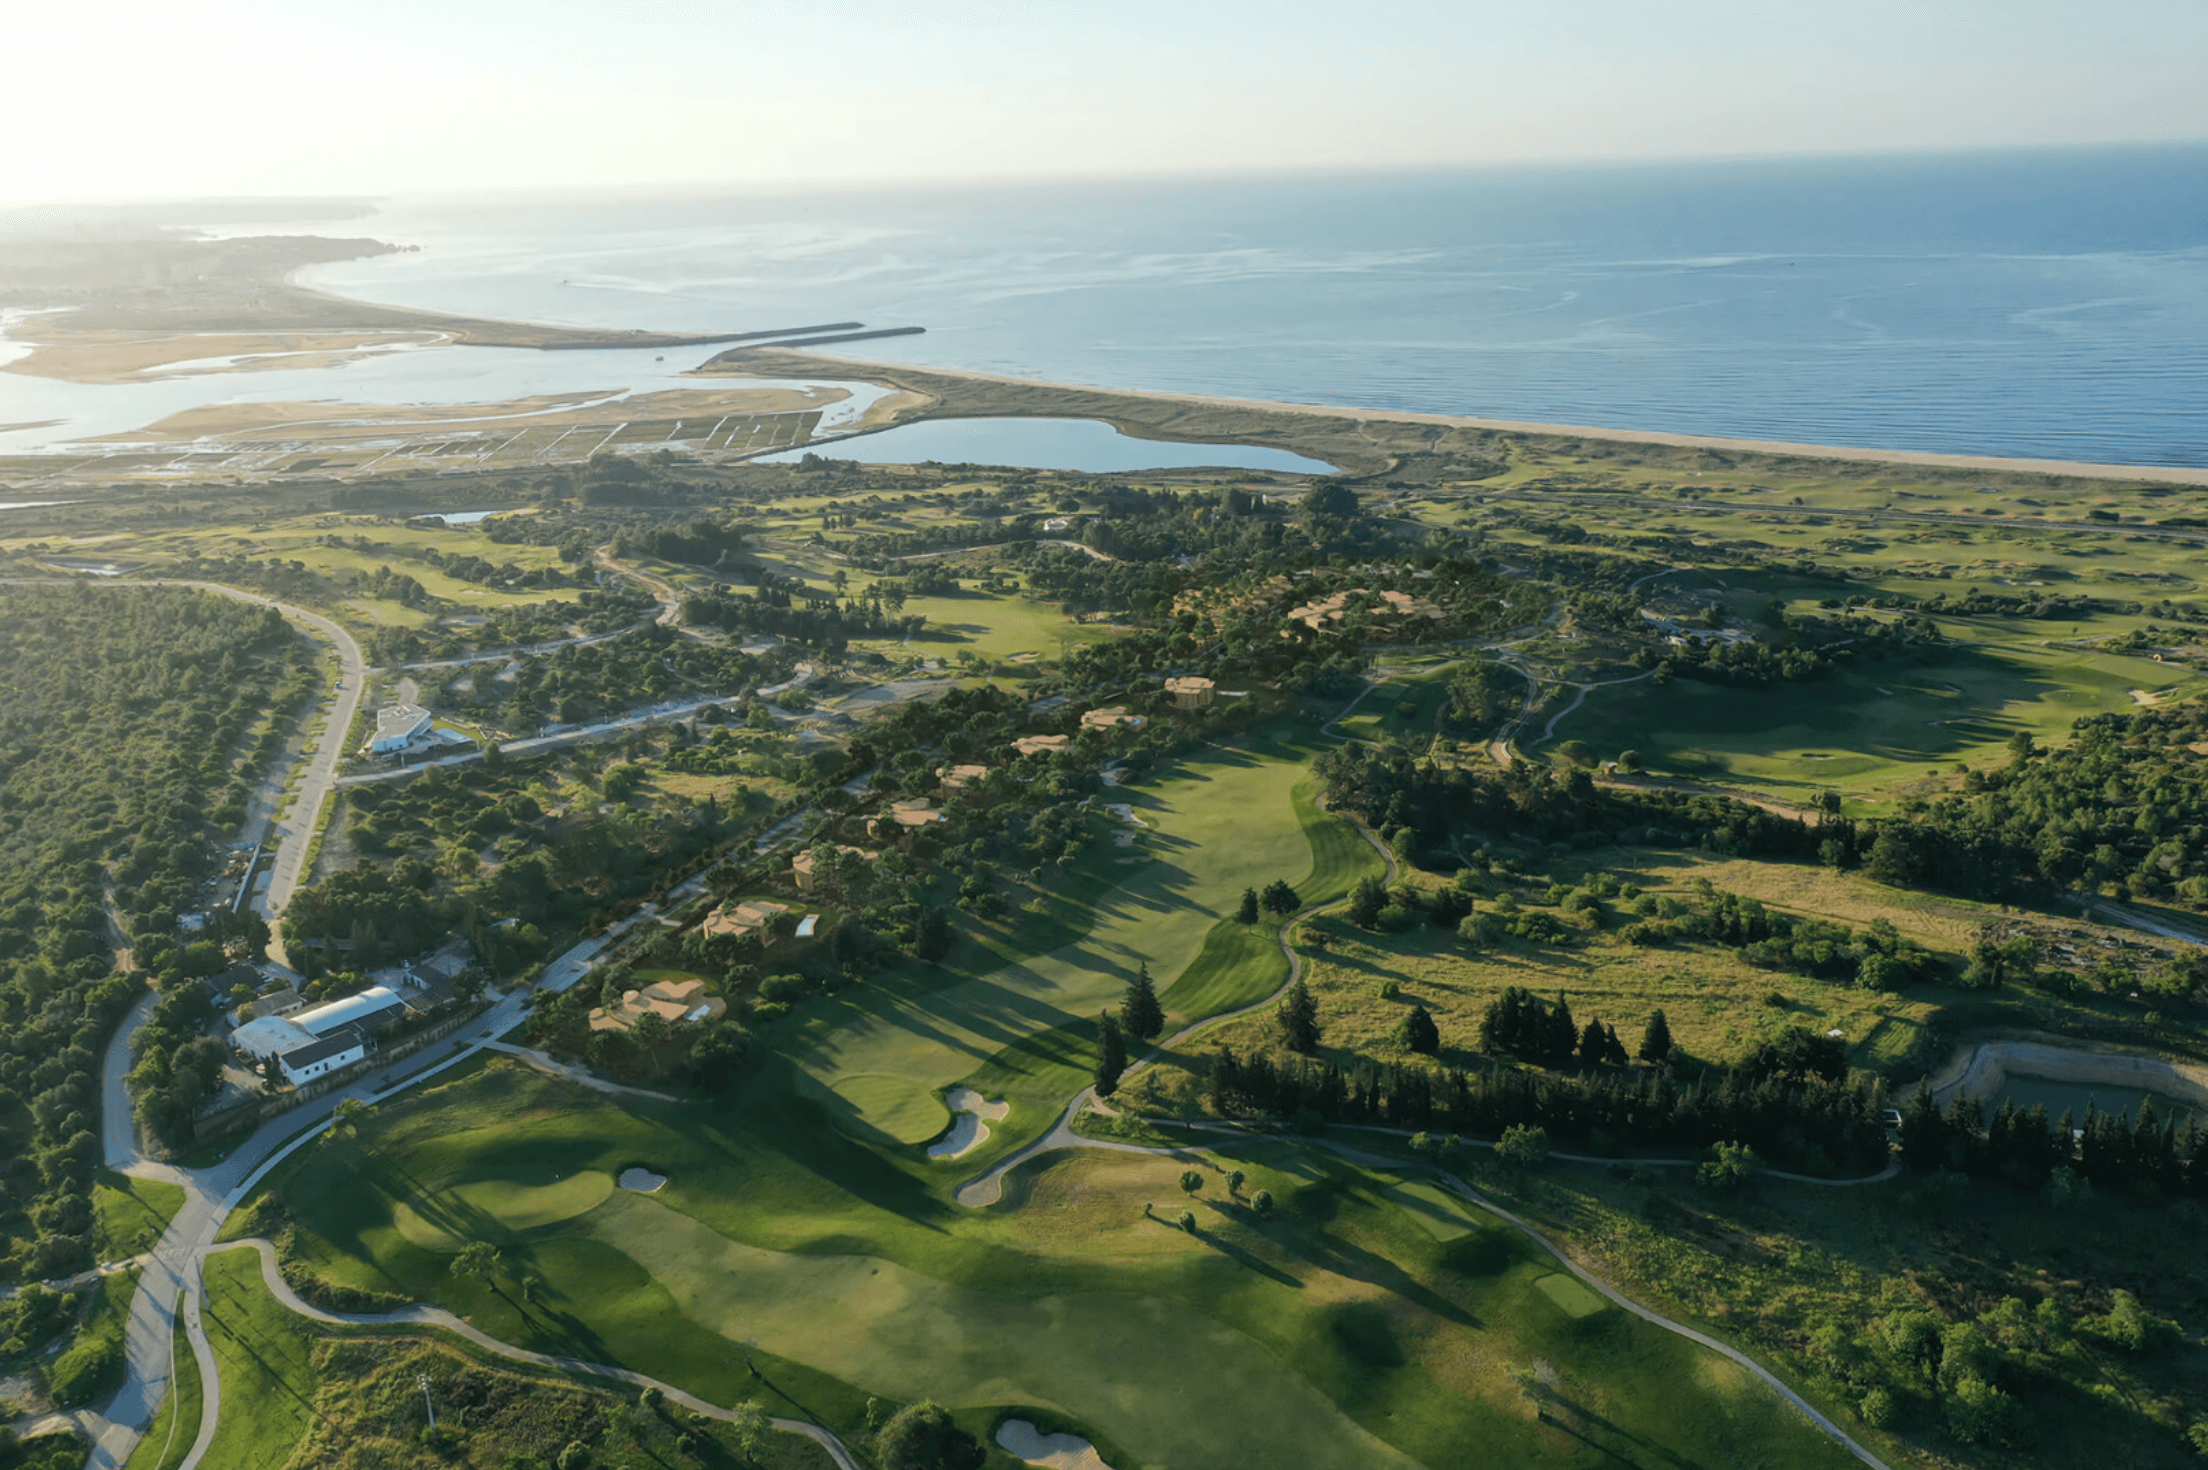 Plots for Sale | Build Your Dream Villa | Stunning Views | Algarve